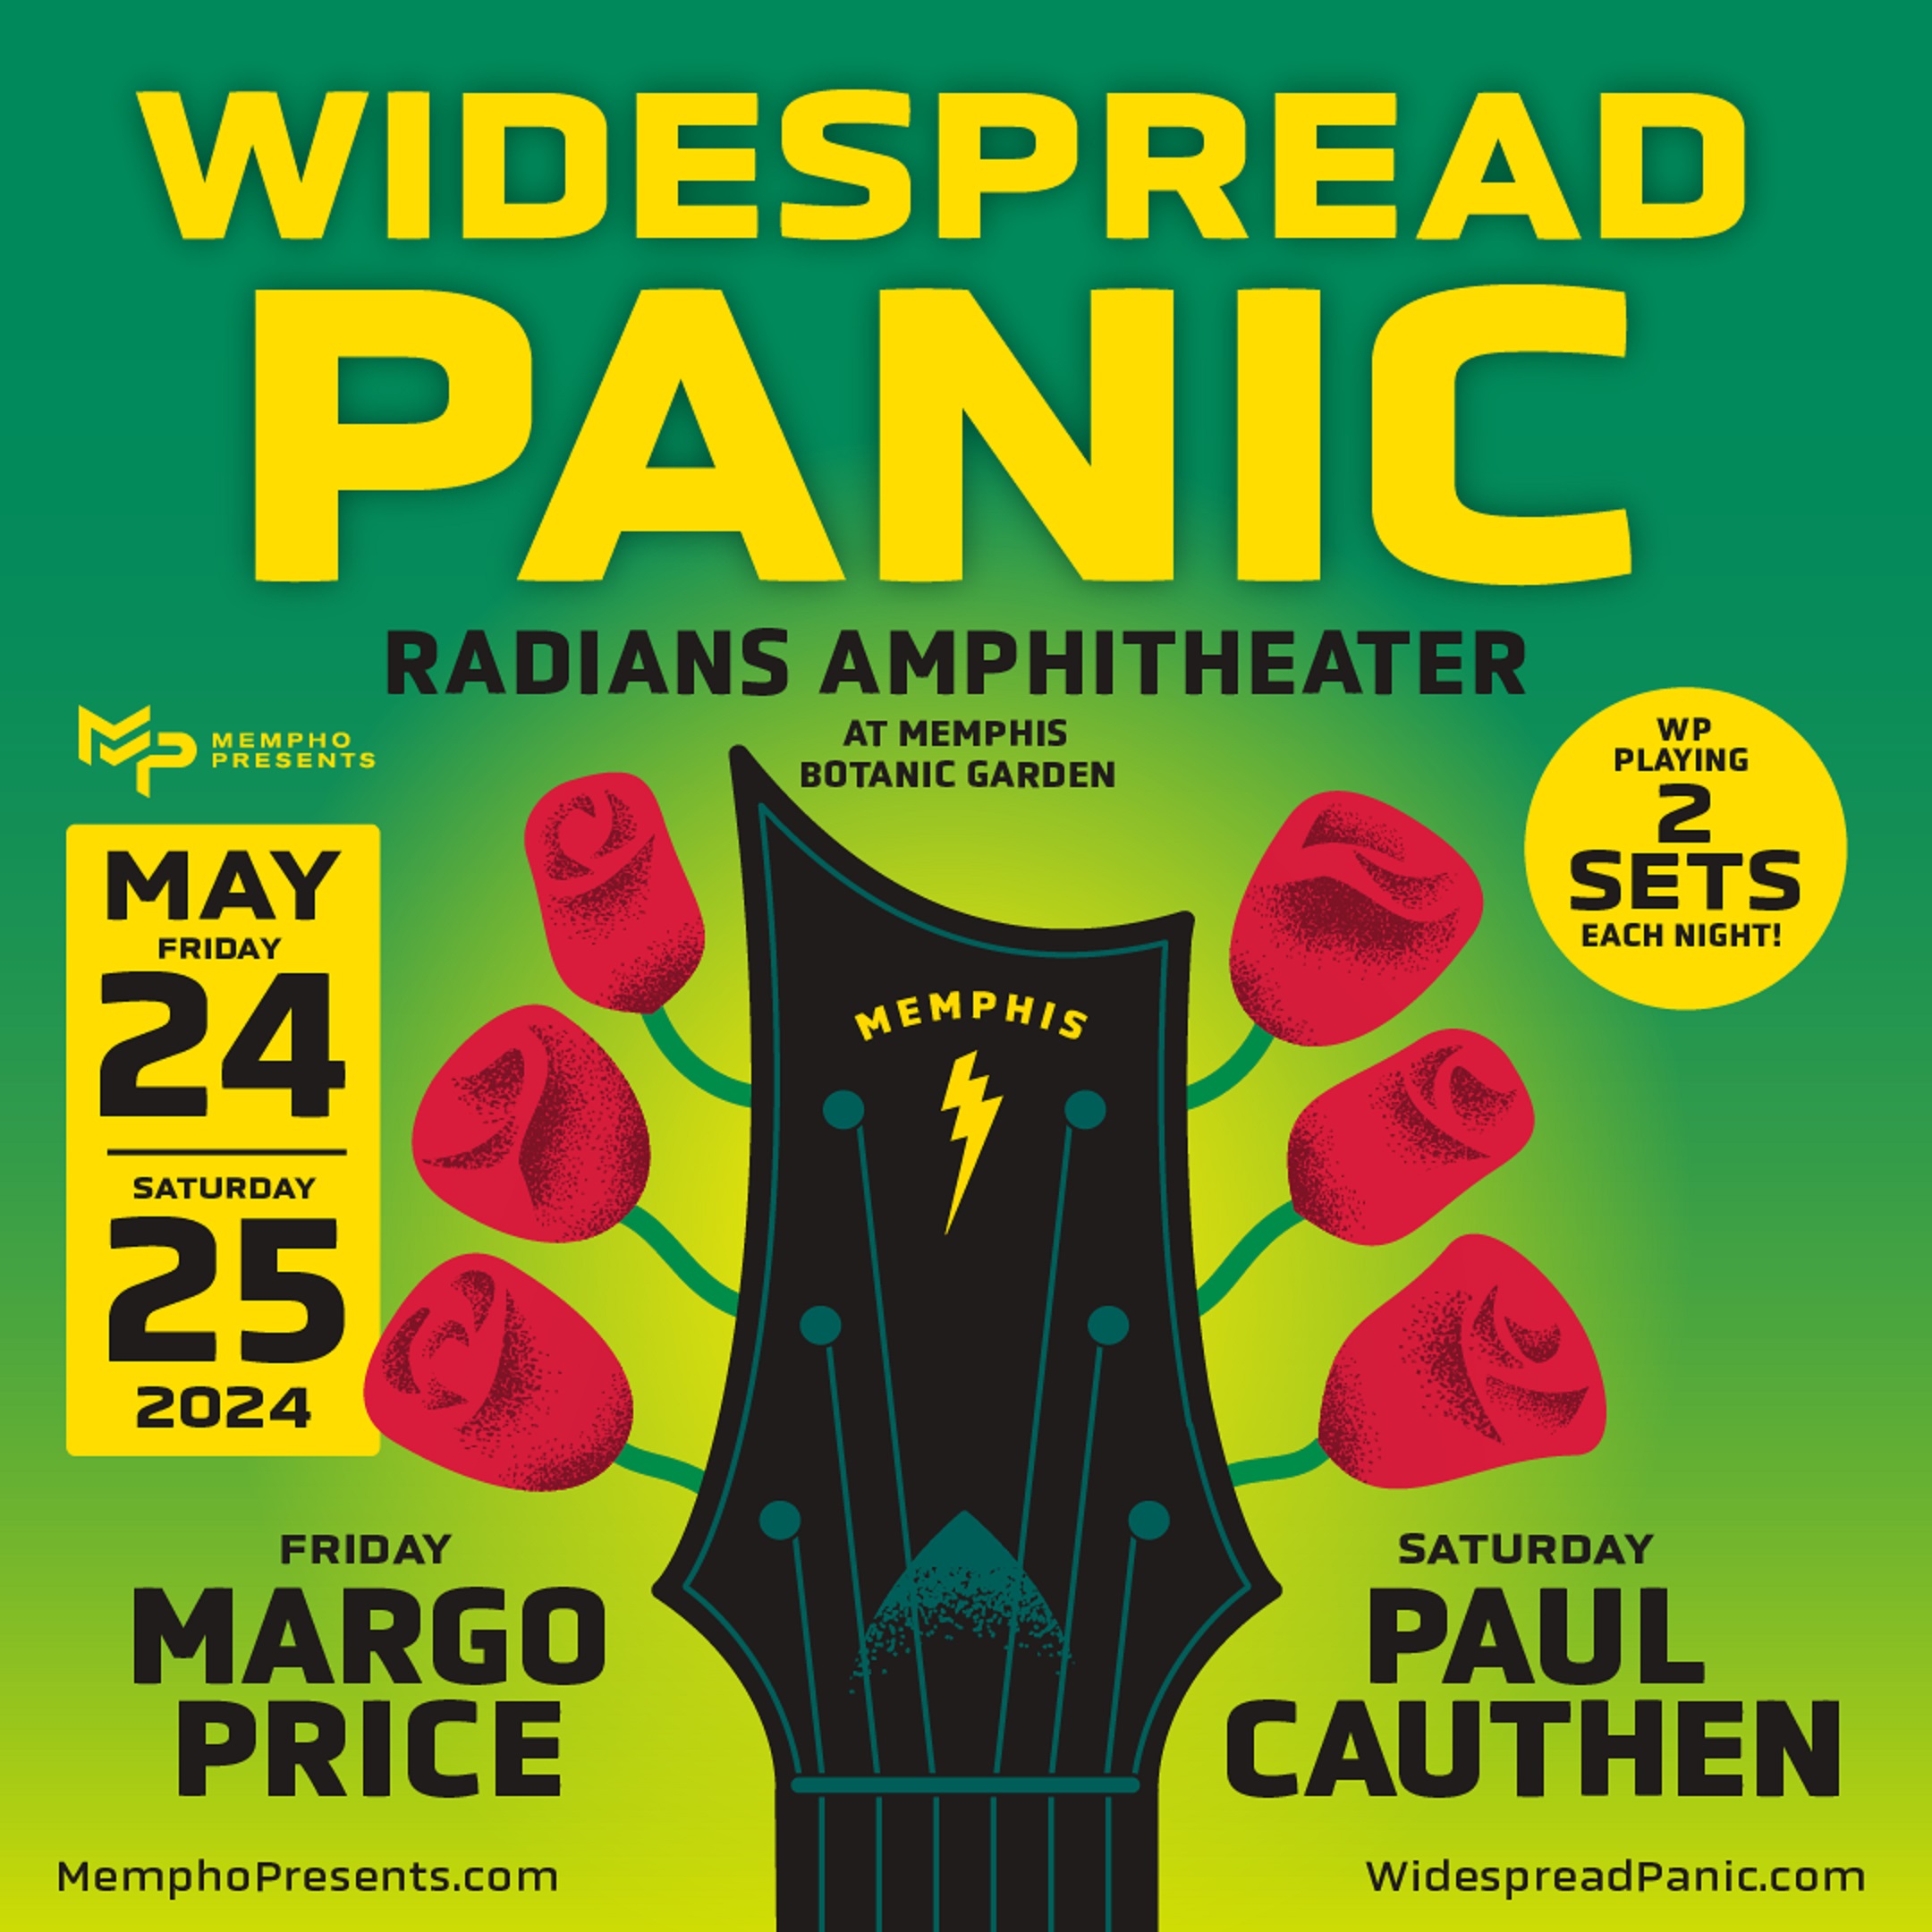 MEMPHO PRESENTS Announces WIDESPREAD PANIC Memorial Weekend – May 24-25 in Memphis, TN